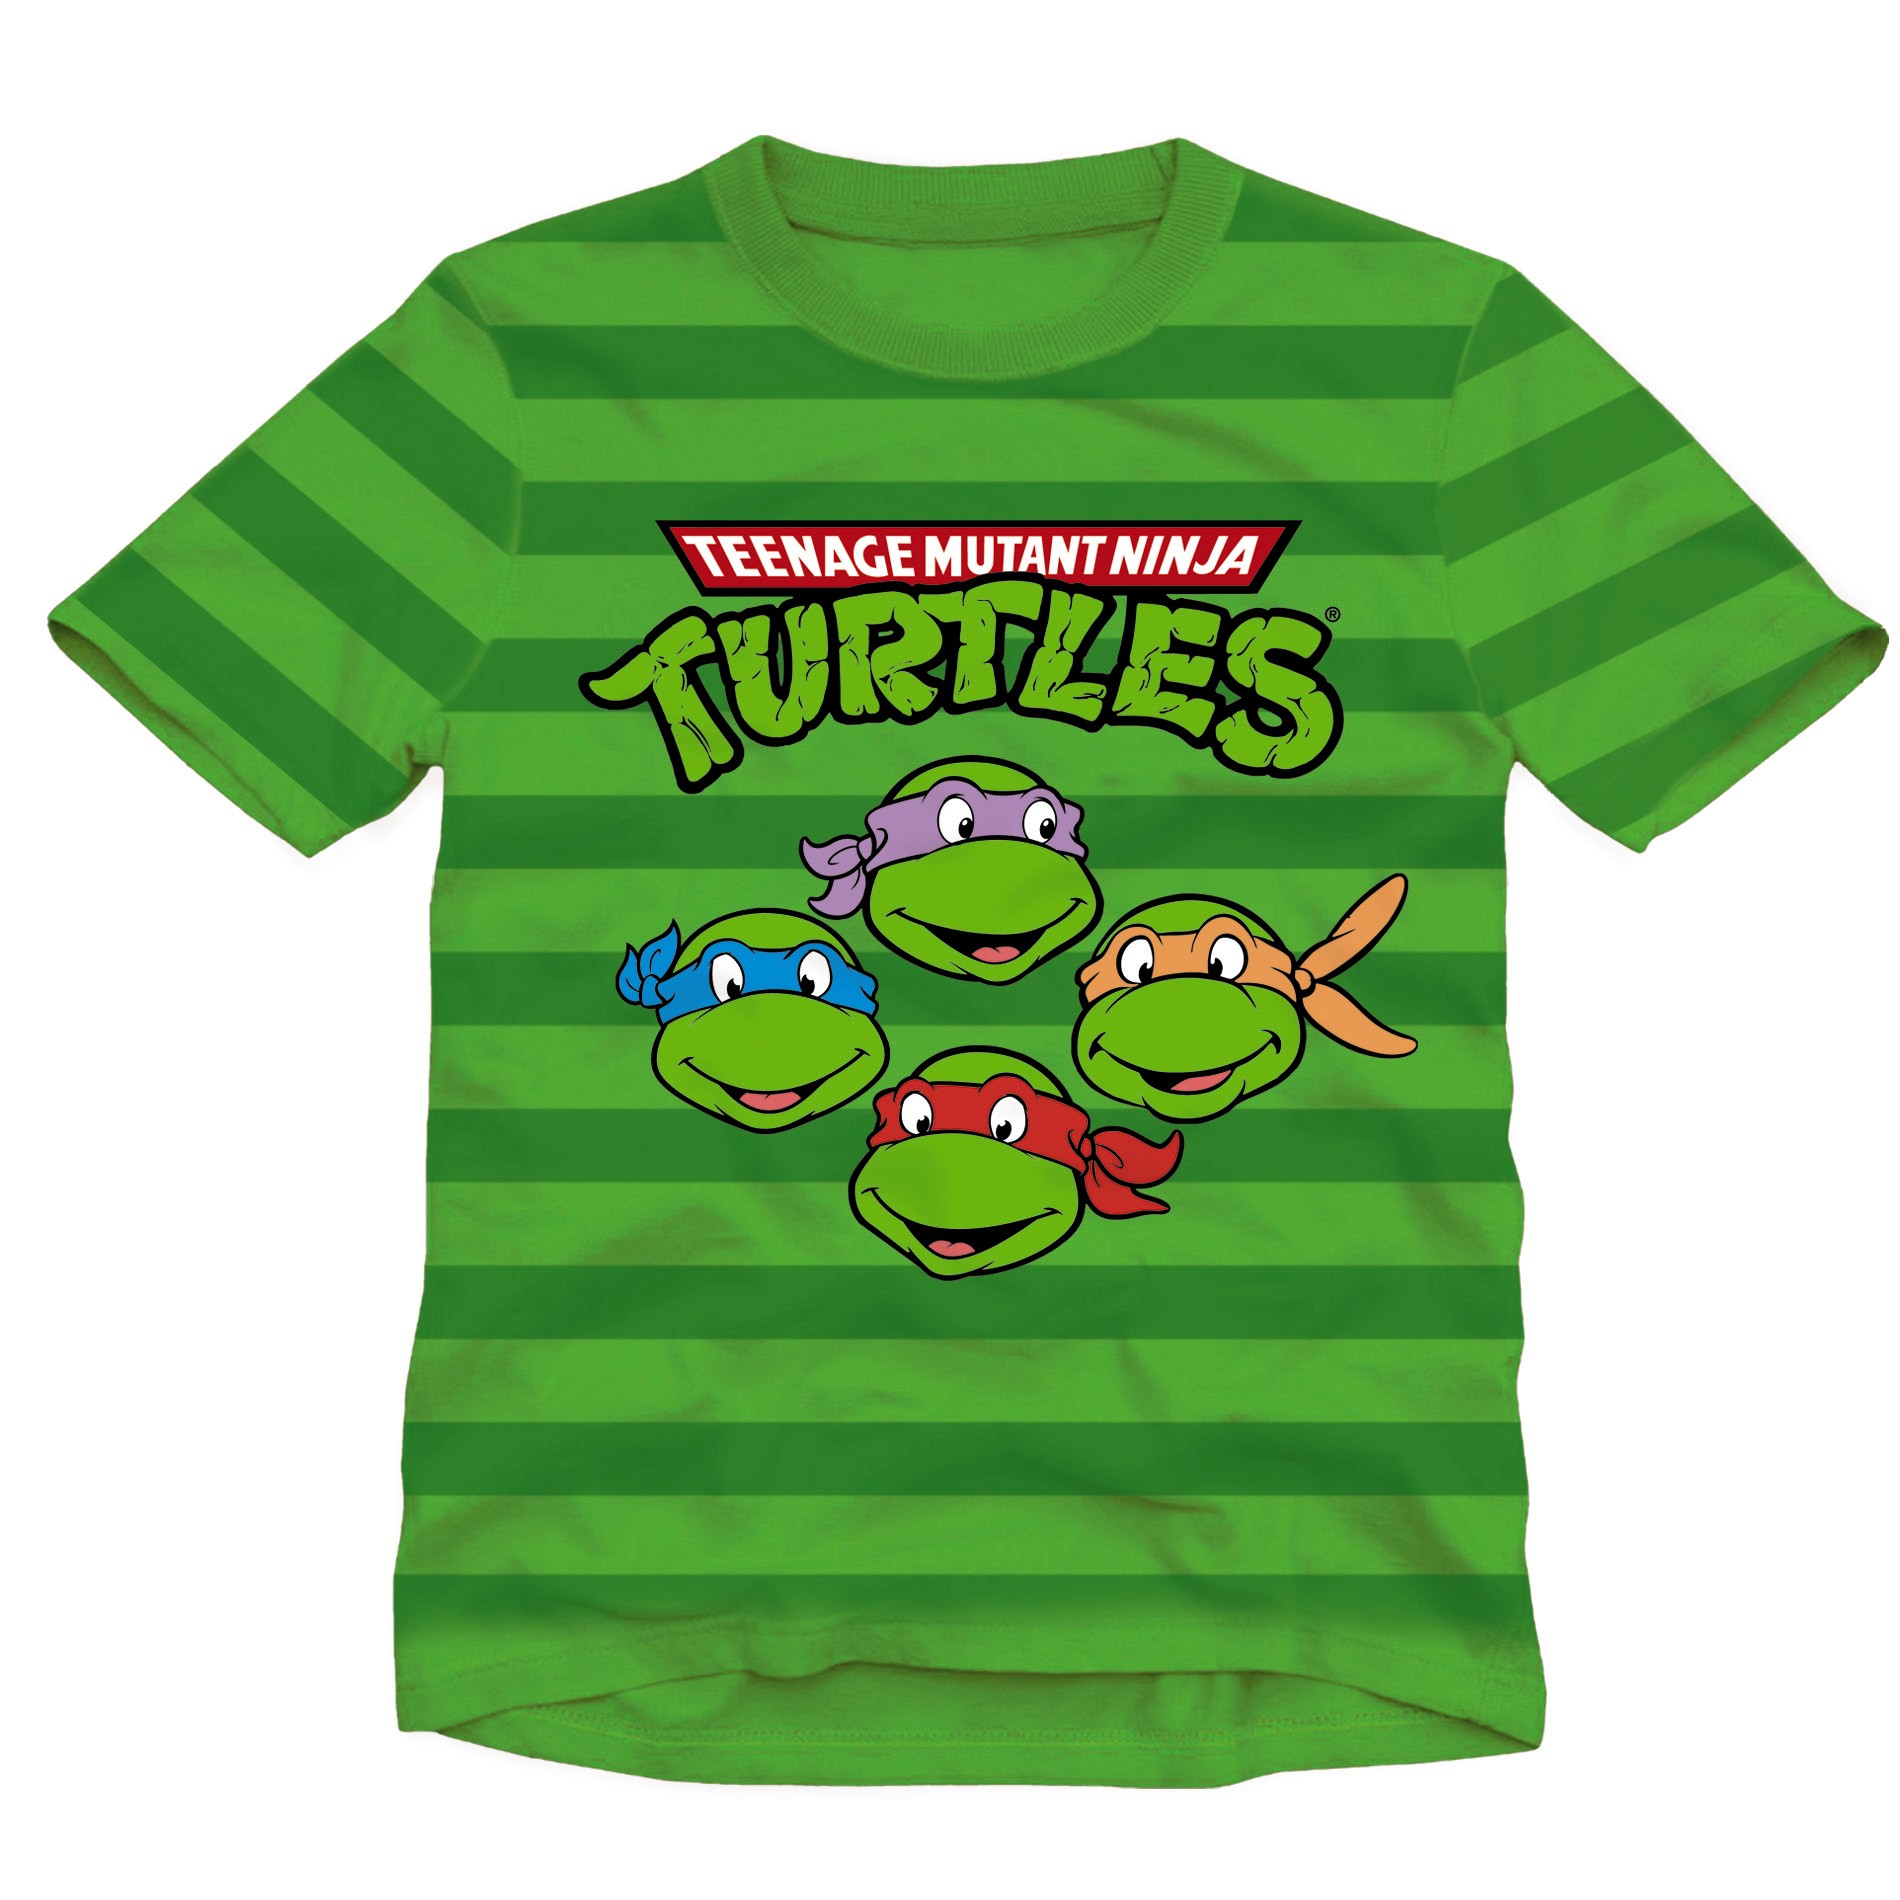 Nickelodeon Teenage Mutant Ninja Turtles Toddler Boy's T-Shirt - Striped